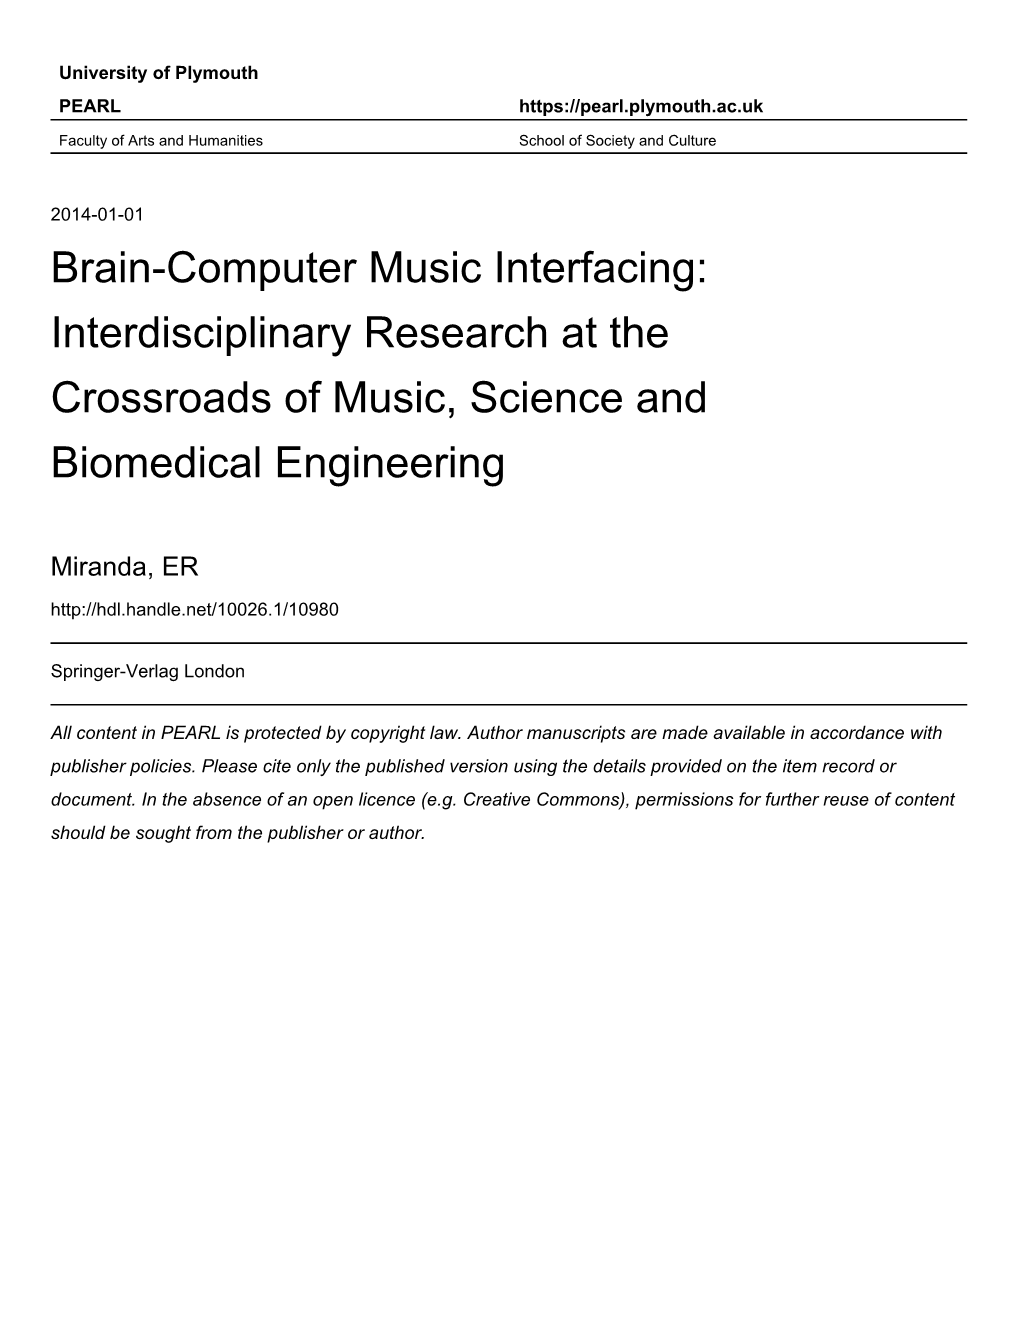 CHAPTER 1 Brain-Computer Music Interfacing